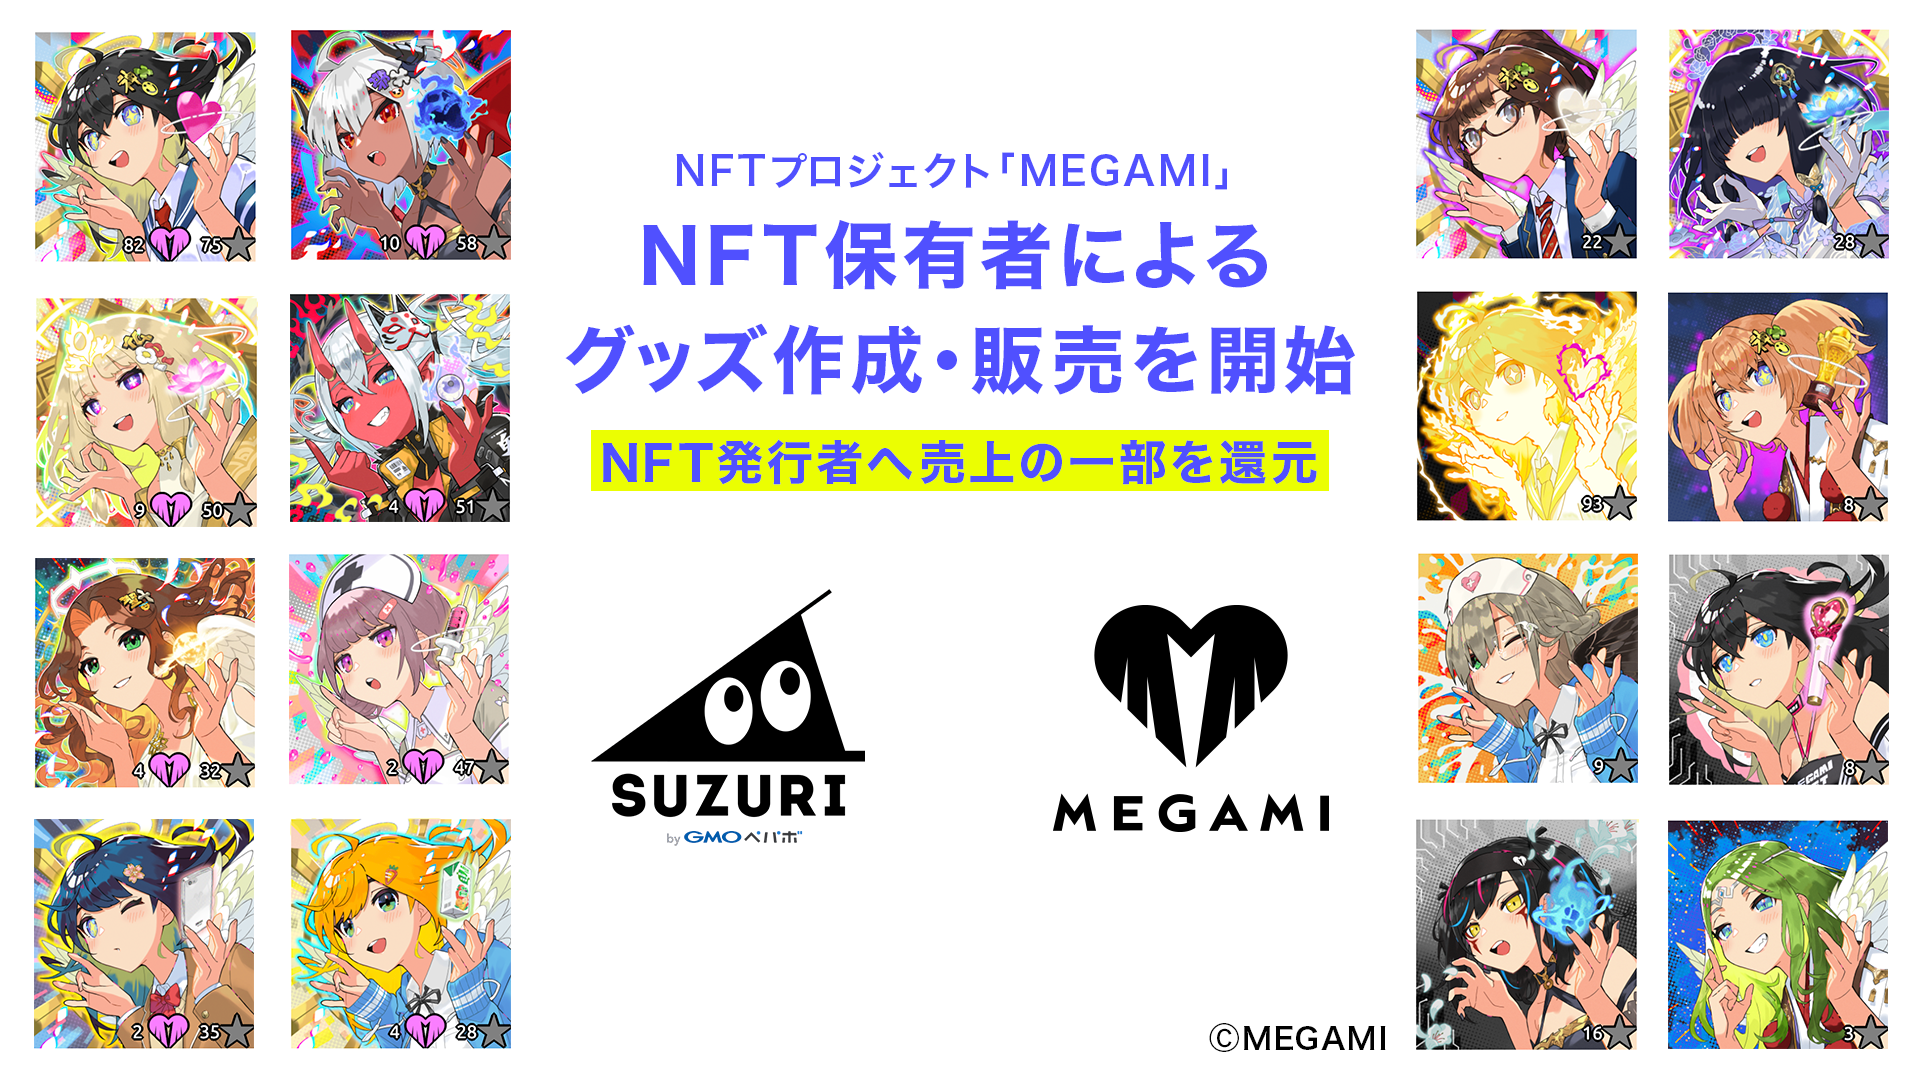 NFTプロジェクト「MEGAMI」 NFT保有者によるグッズ作成・販売を開始 NFT発行者へ売上の一部を還元